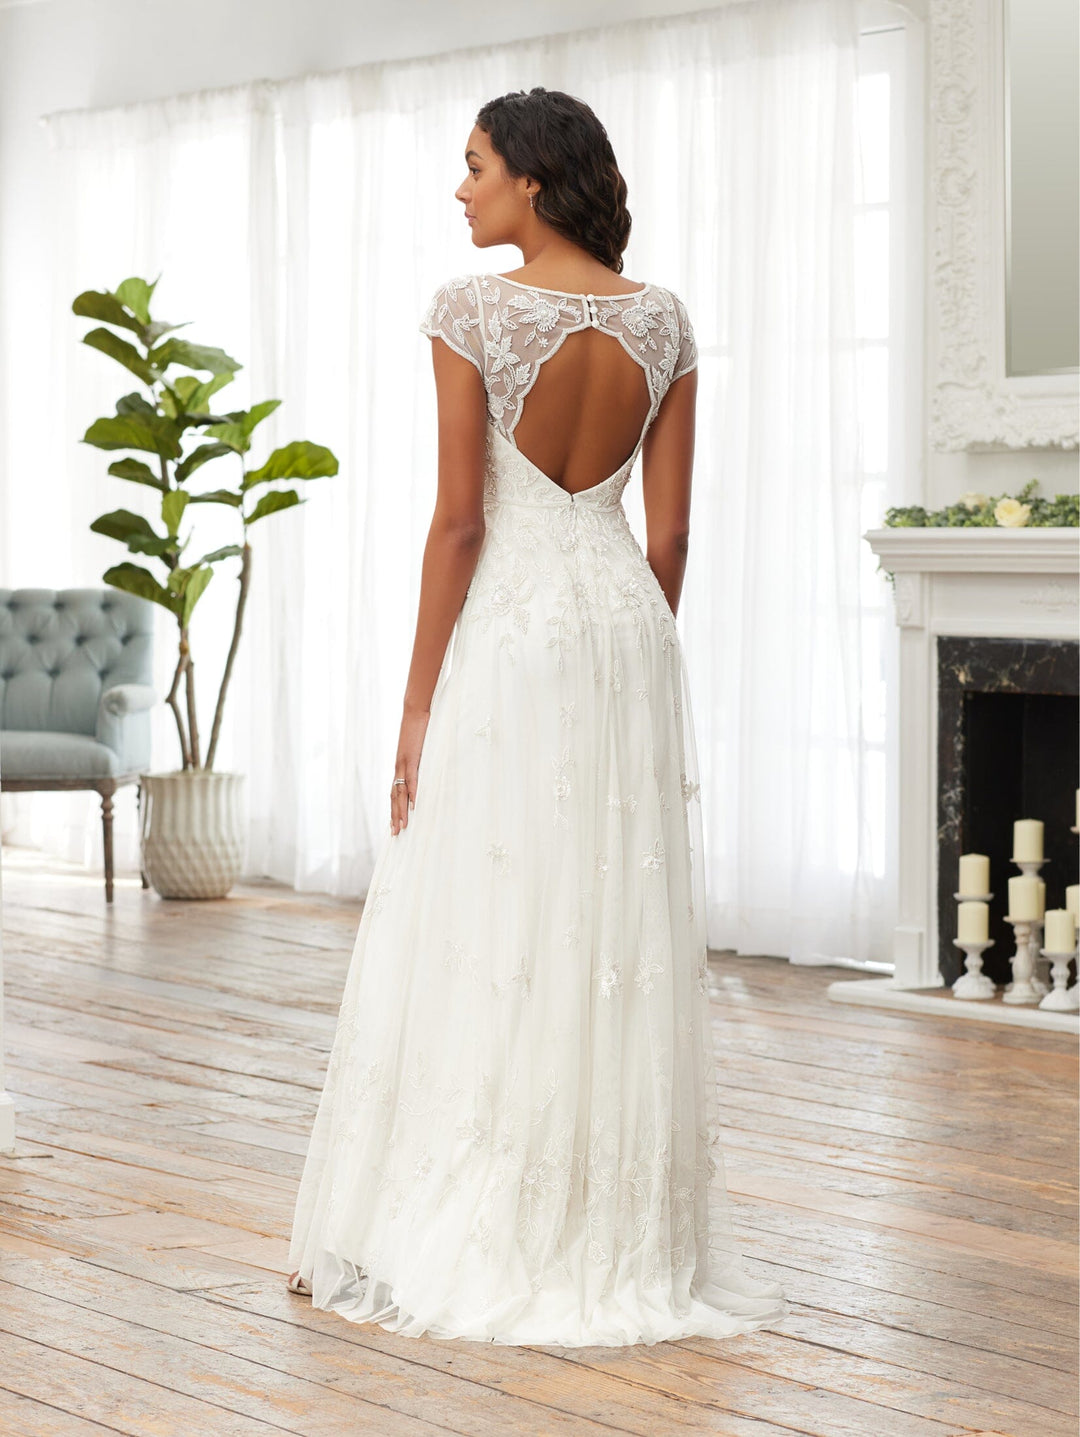 Short Sleeve Wedding Dress by Adrianna Papell 40383